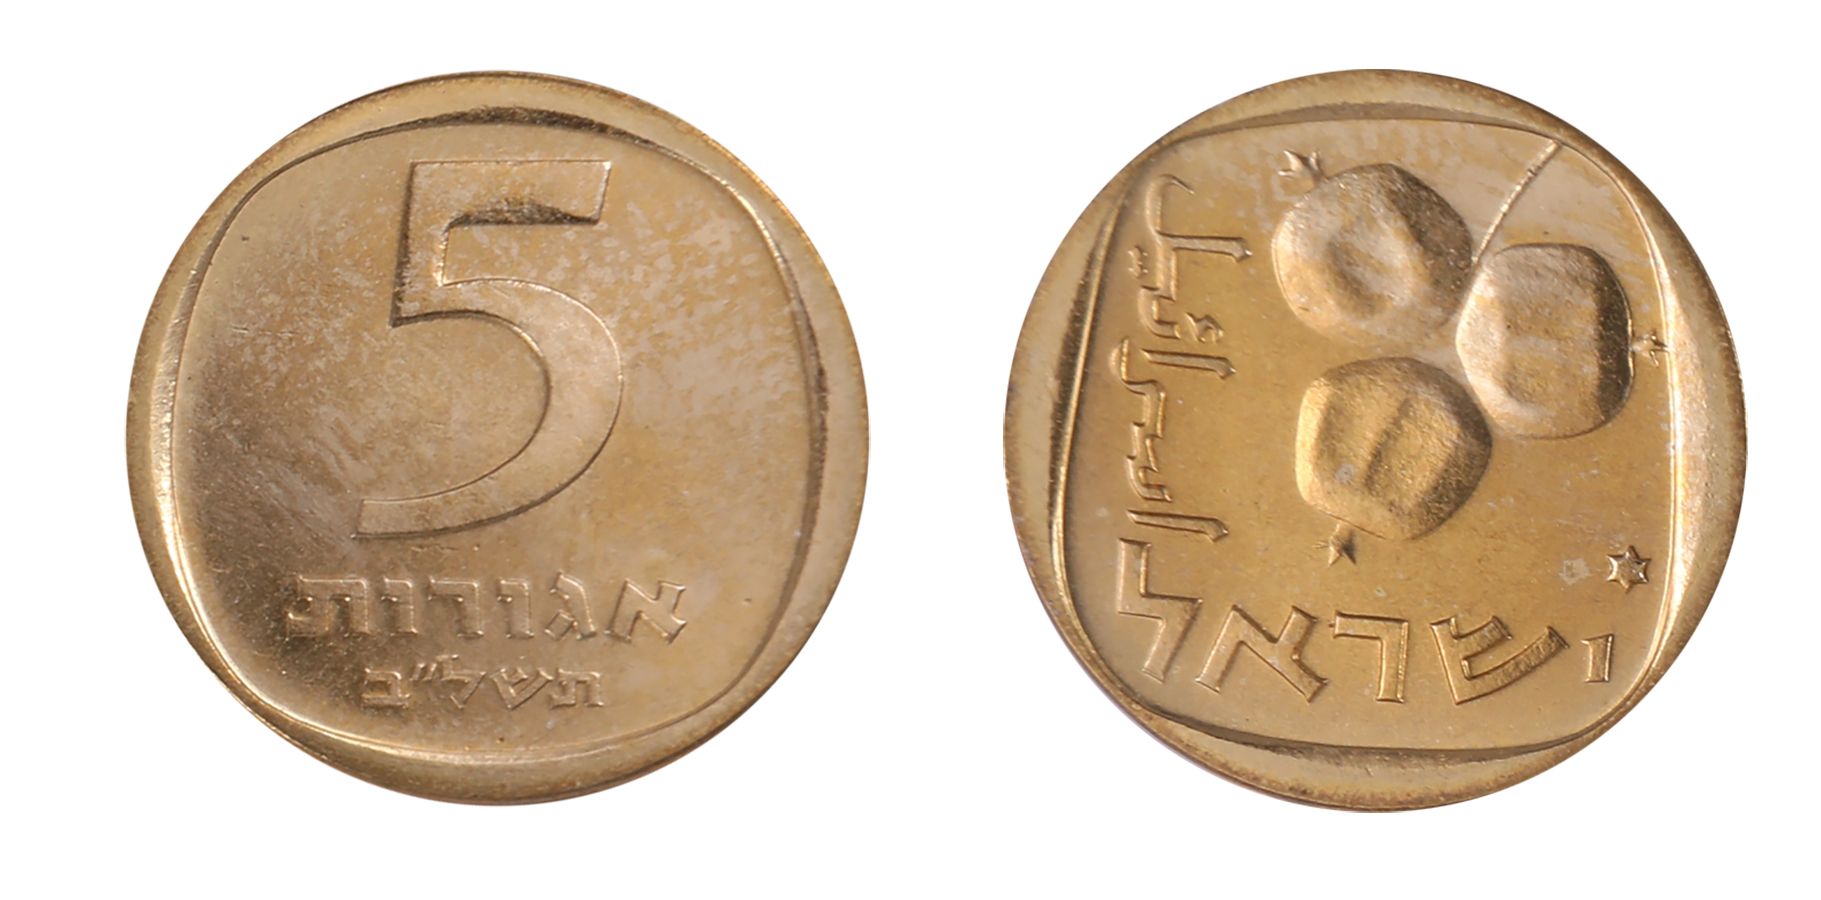 ISRAEL SET 6 COINS 1 5 10 25 AGOROT 1/2 1 LIRA 1974 AU-UNC